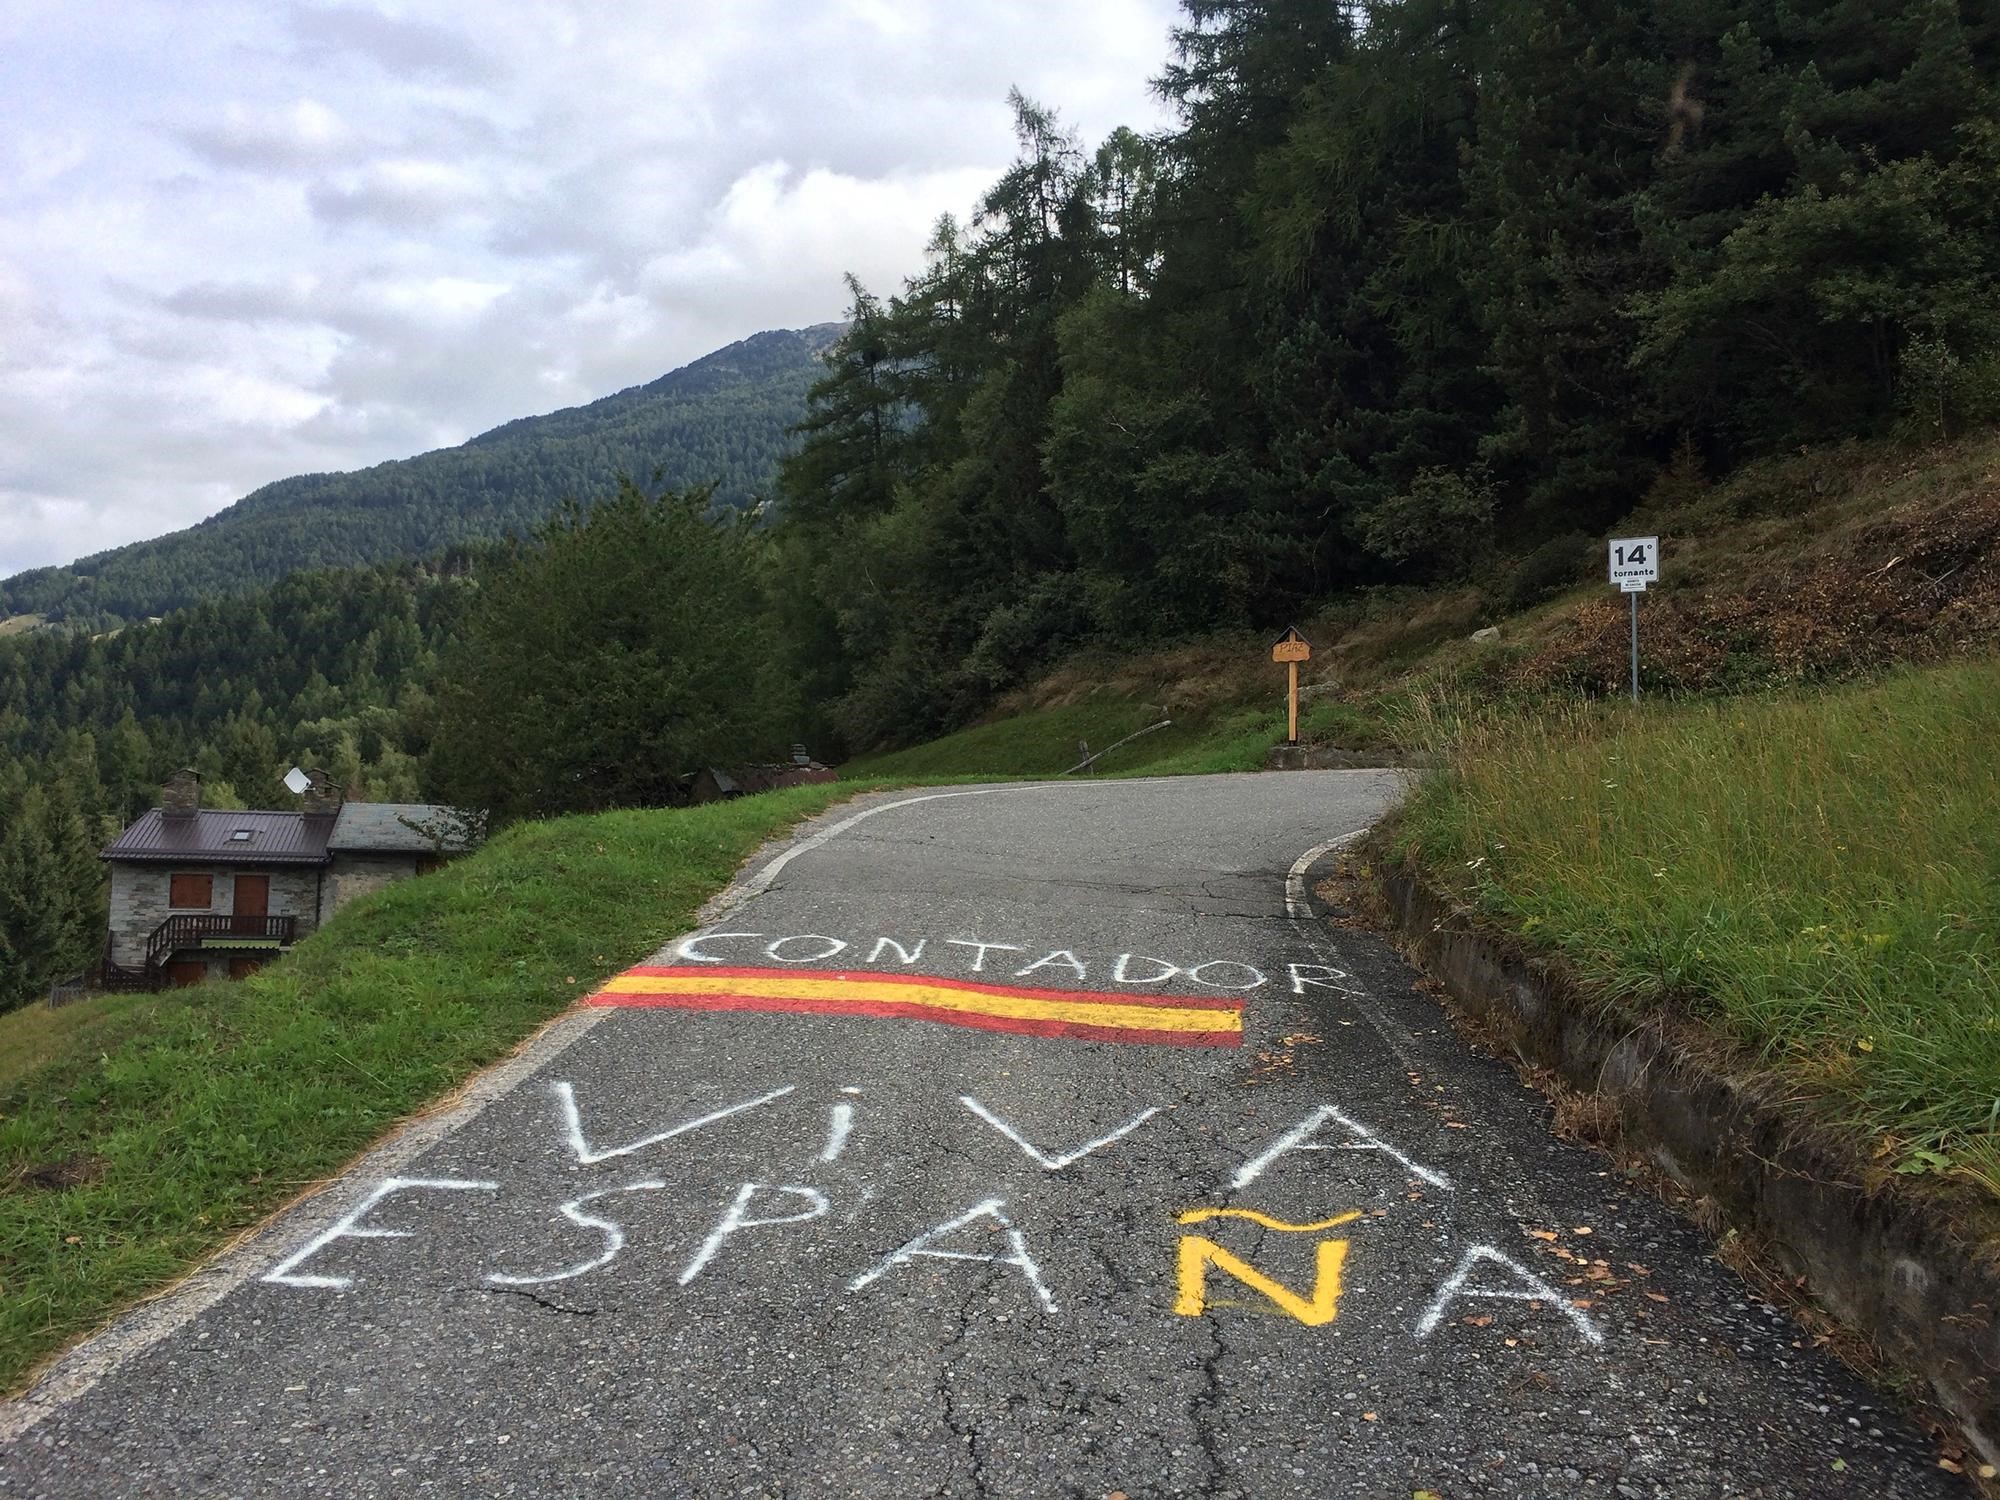 Above: Photo I took when climbing the Mortirolo showing Contador’s name written on the road from the previous Giro